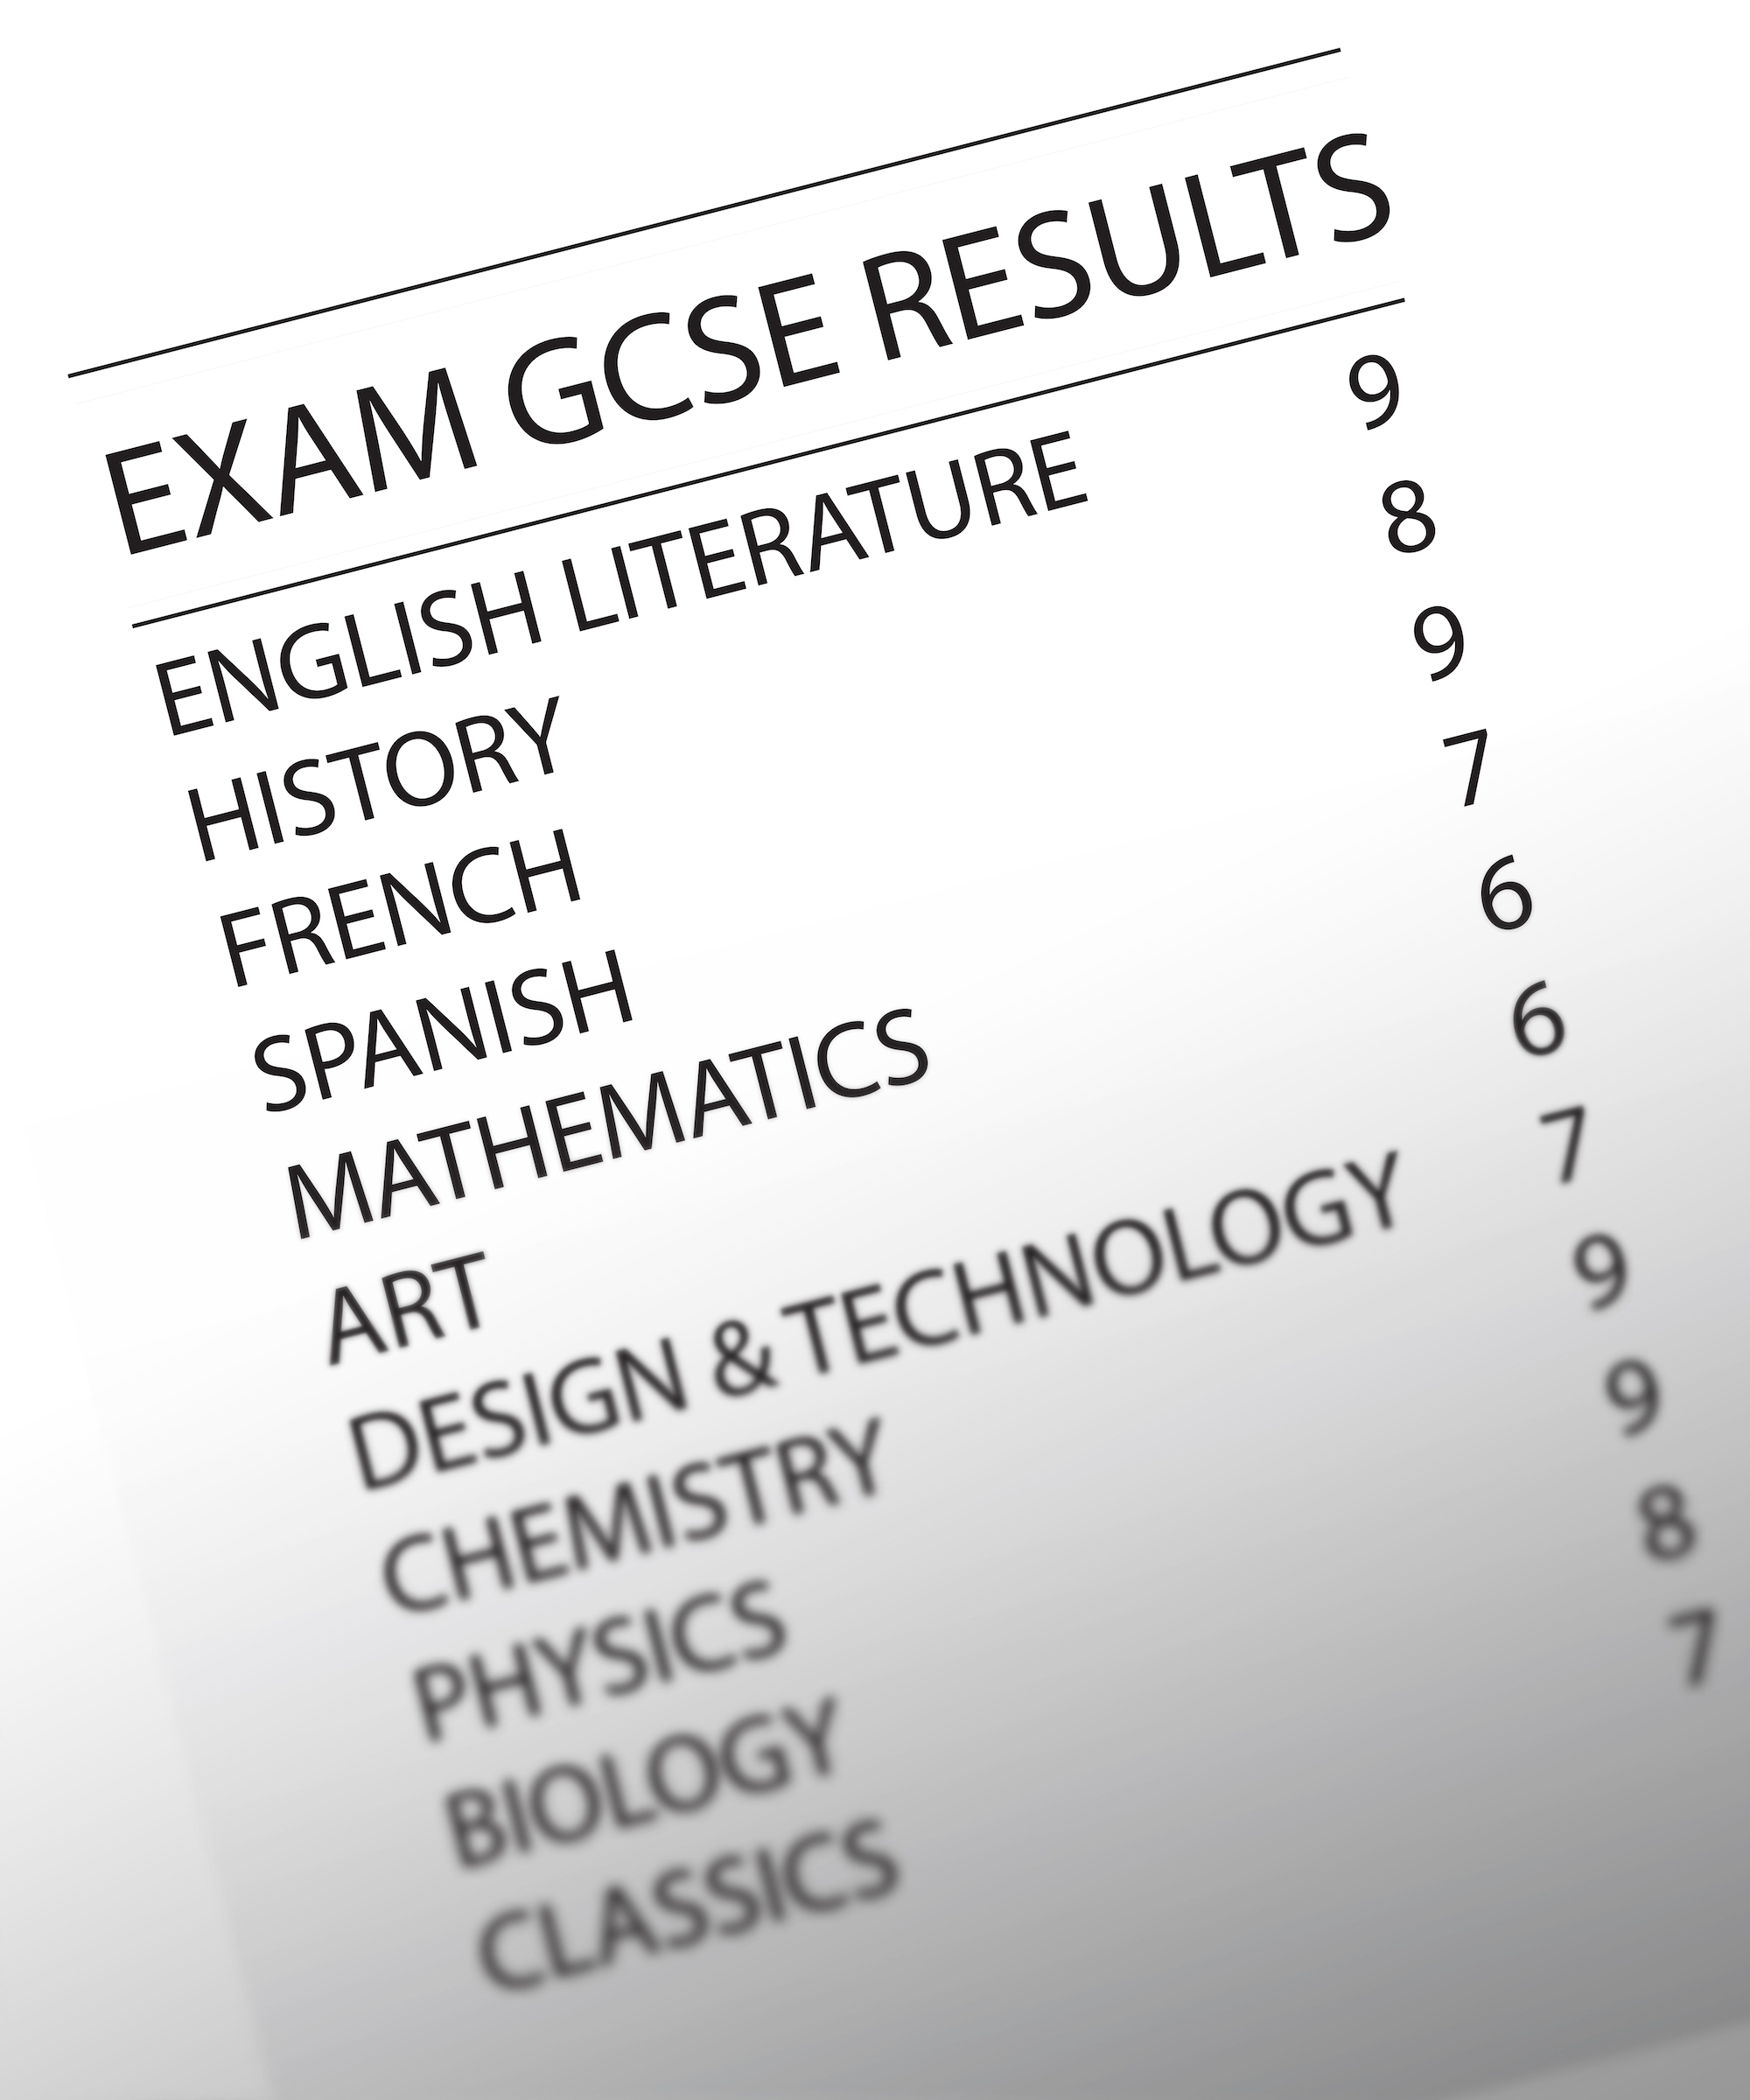 Understanding GCSE 9-1 marks and grades